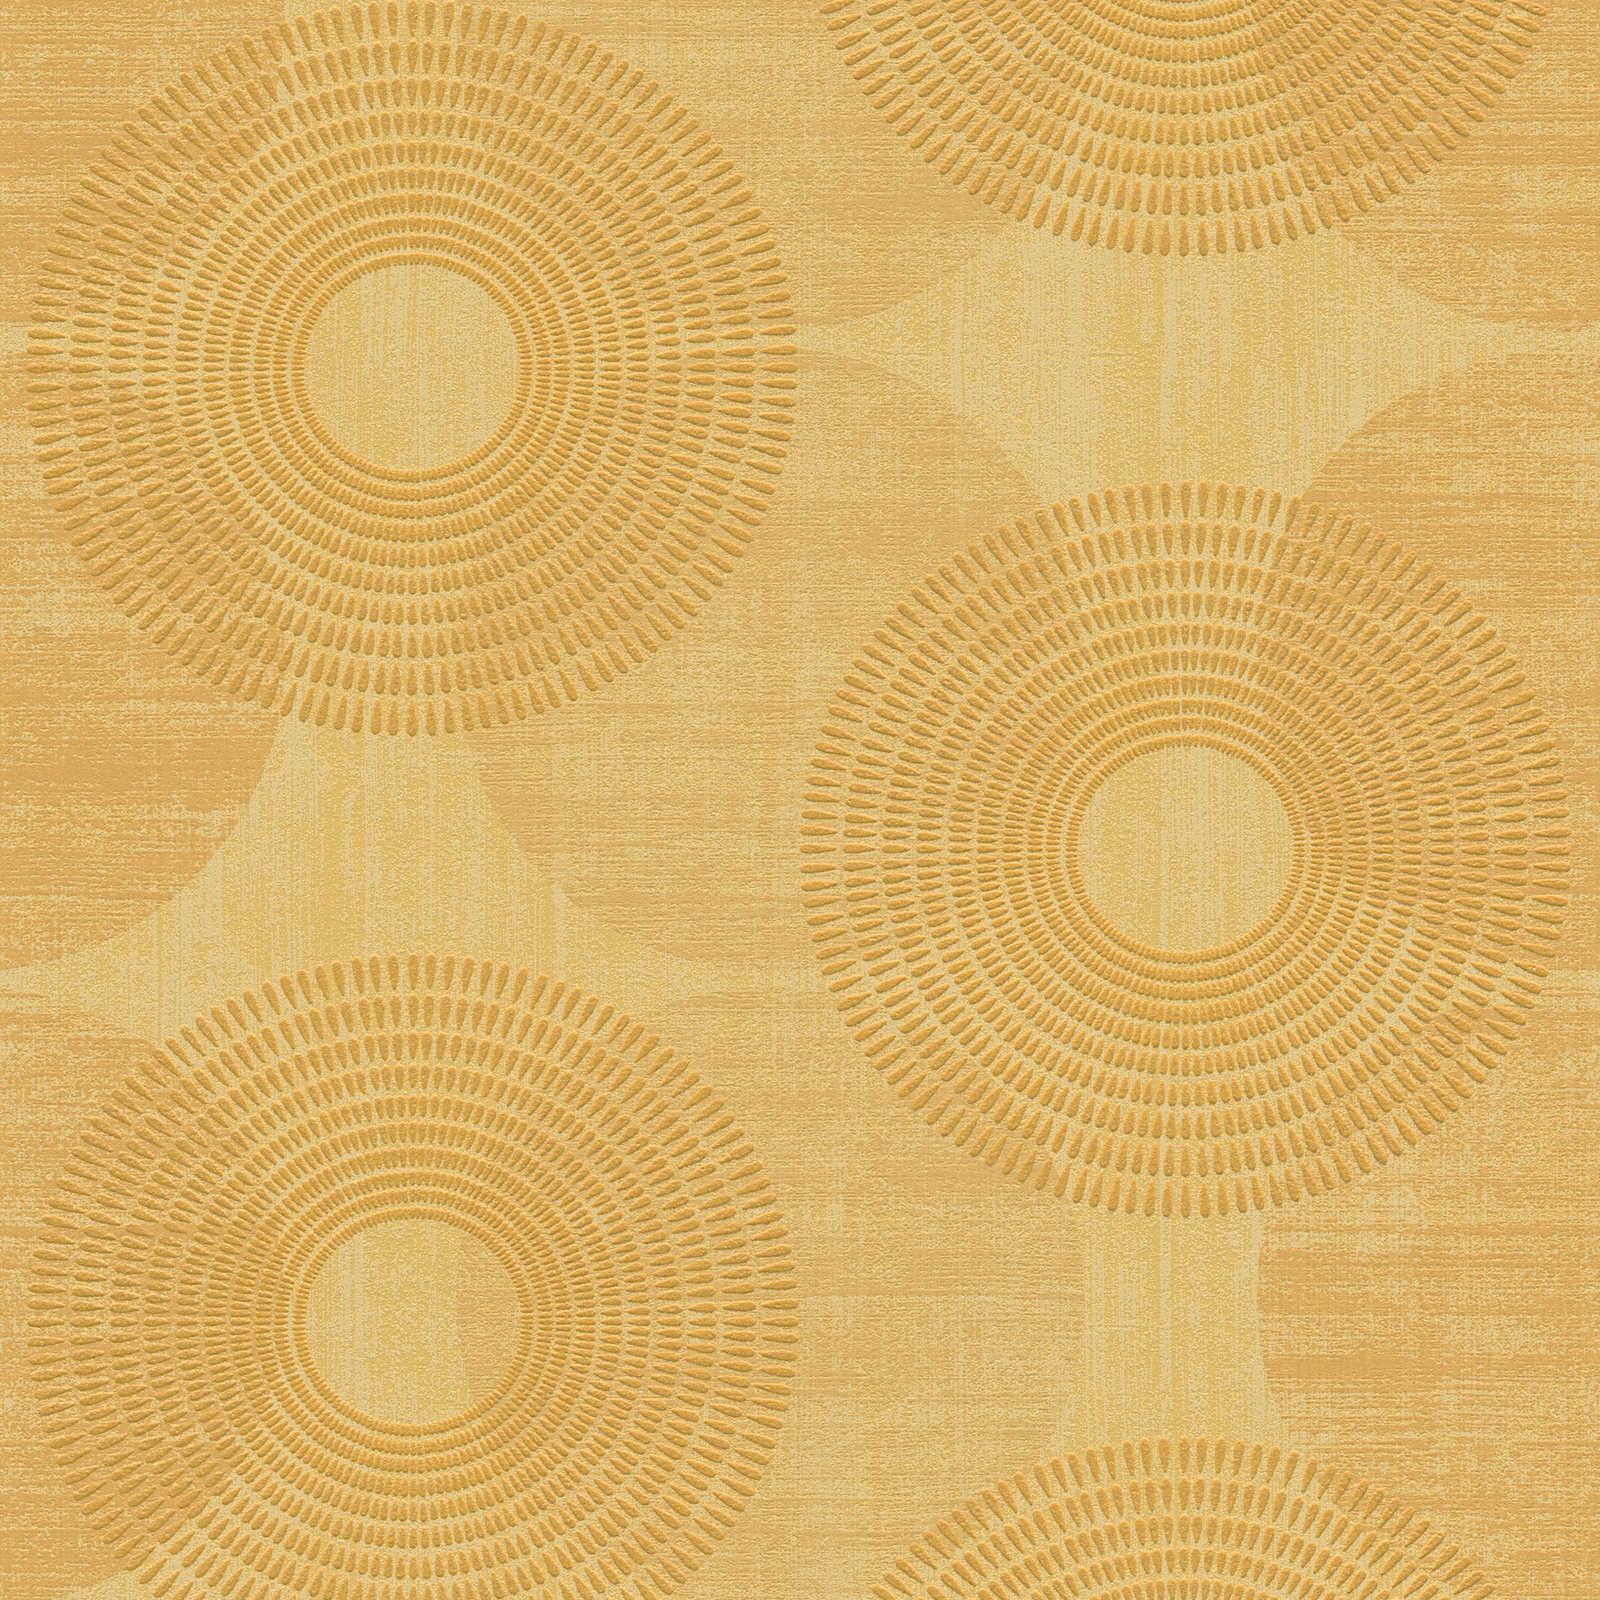 Scandinavian style wallpaper with modern pattern - yellow
